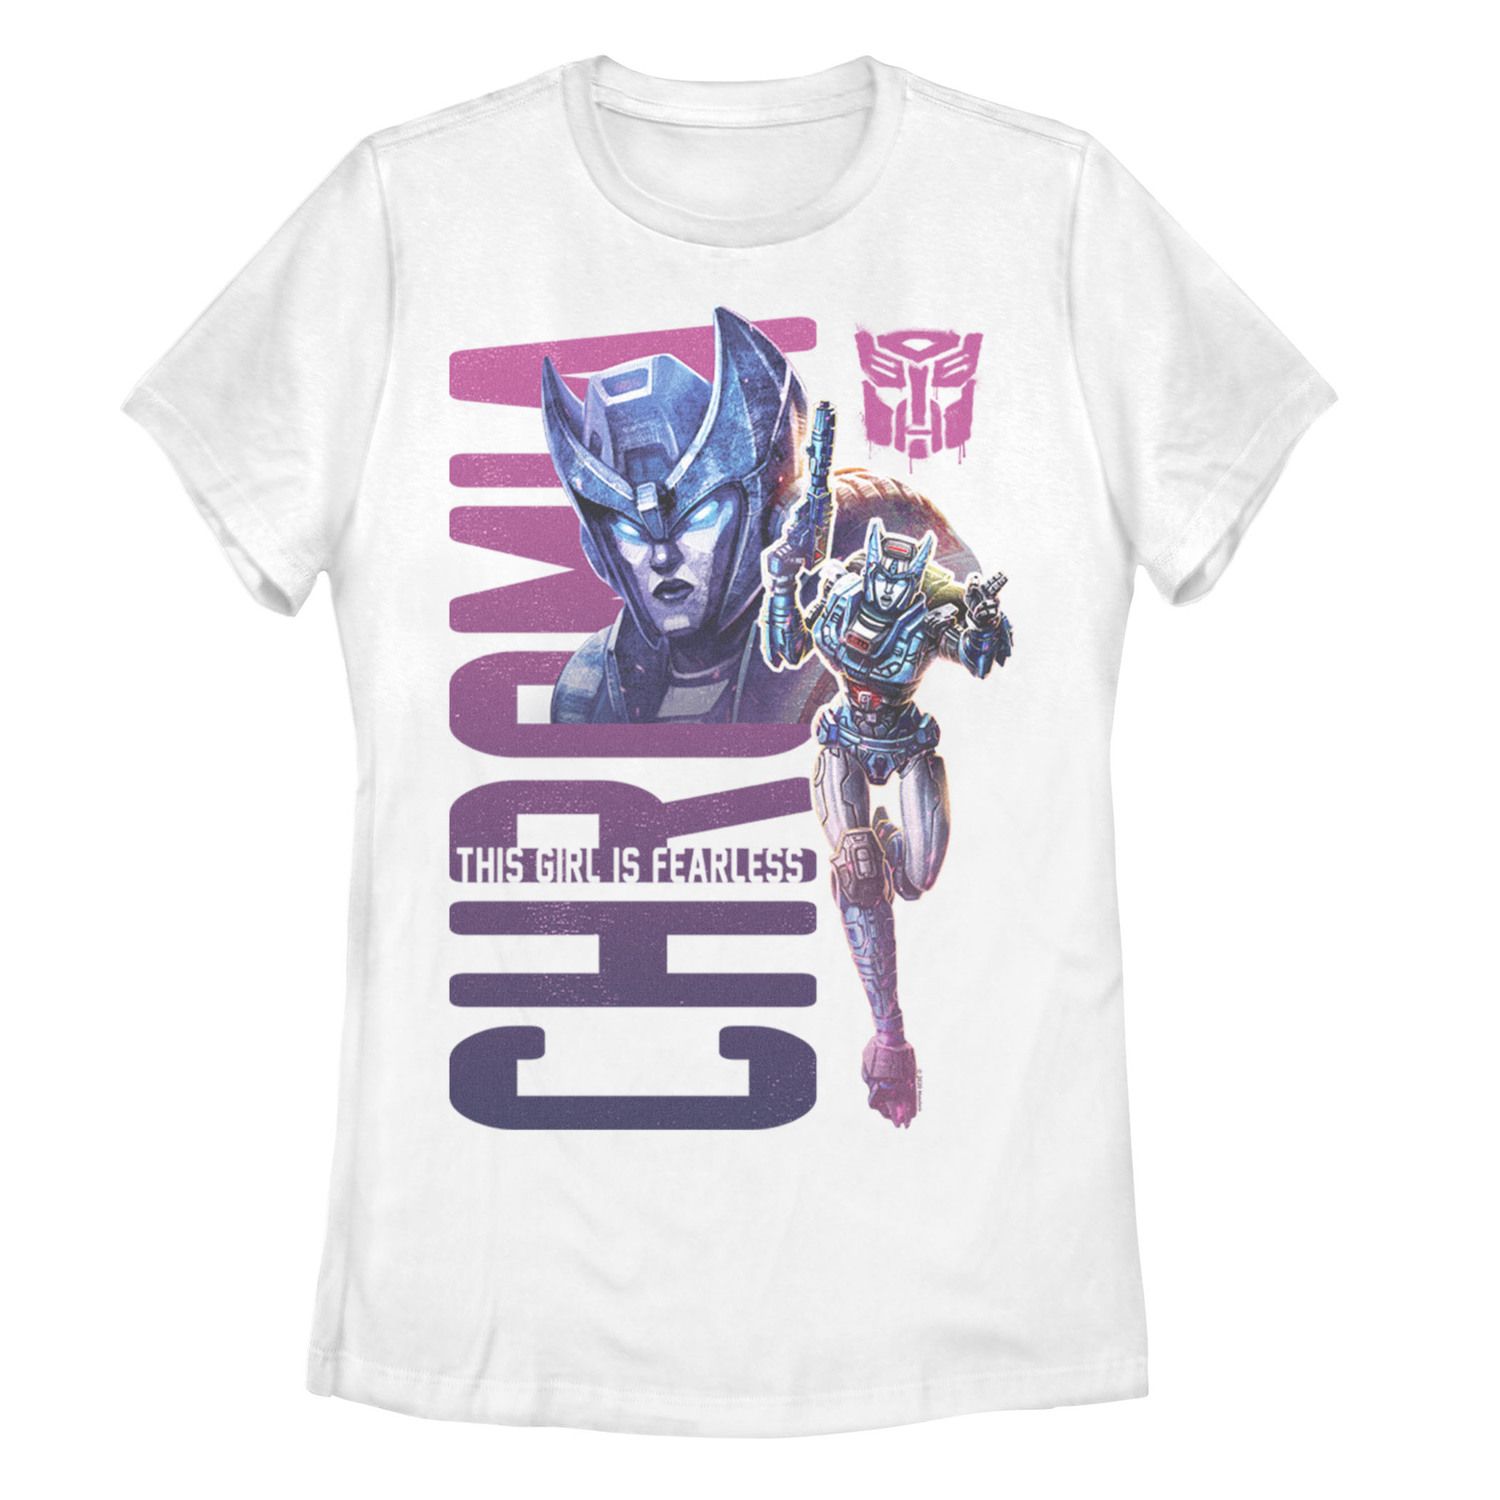 Детская футболка Transformers Chromia Fearless с рисунком Licensed Character